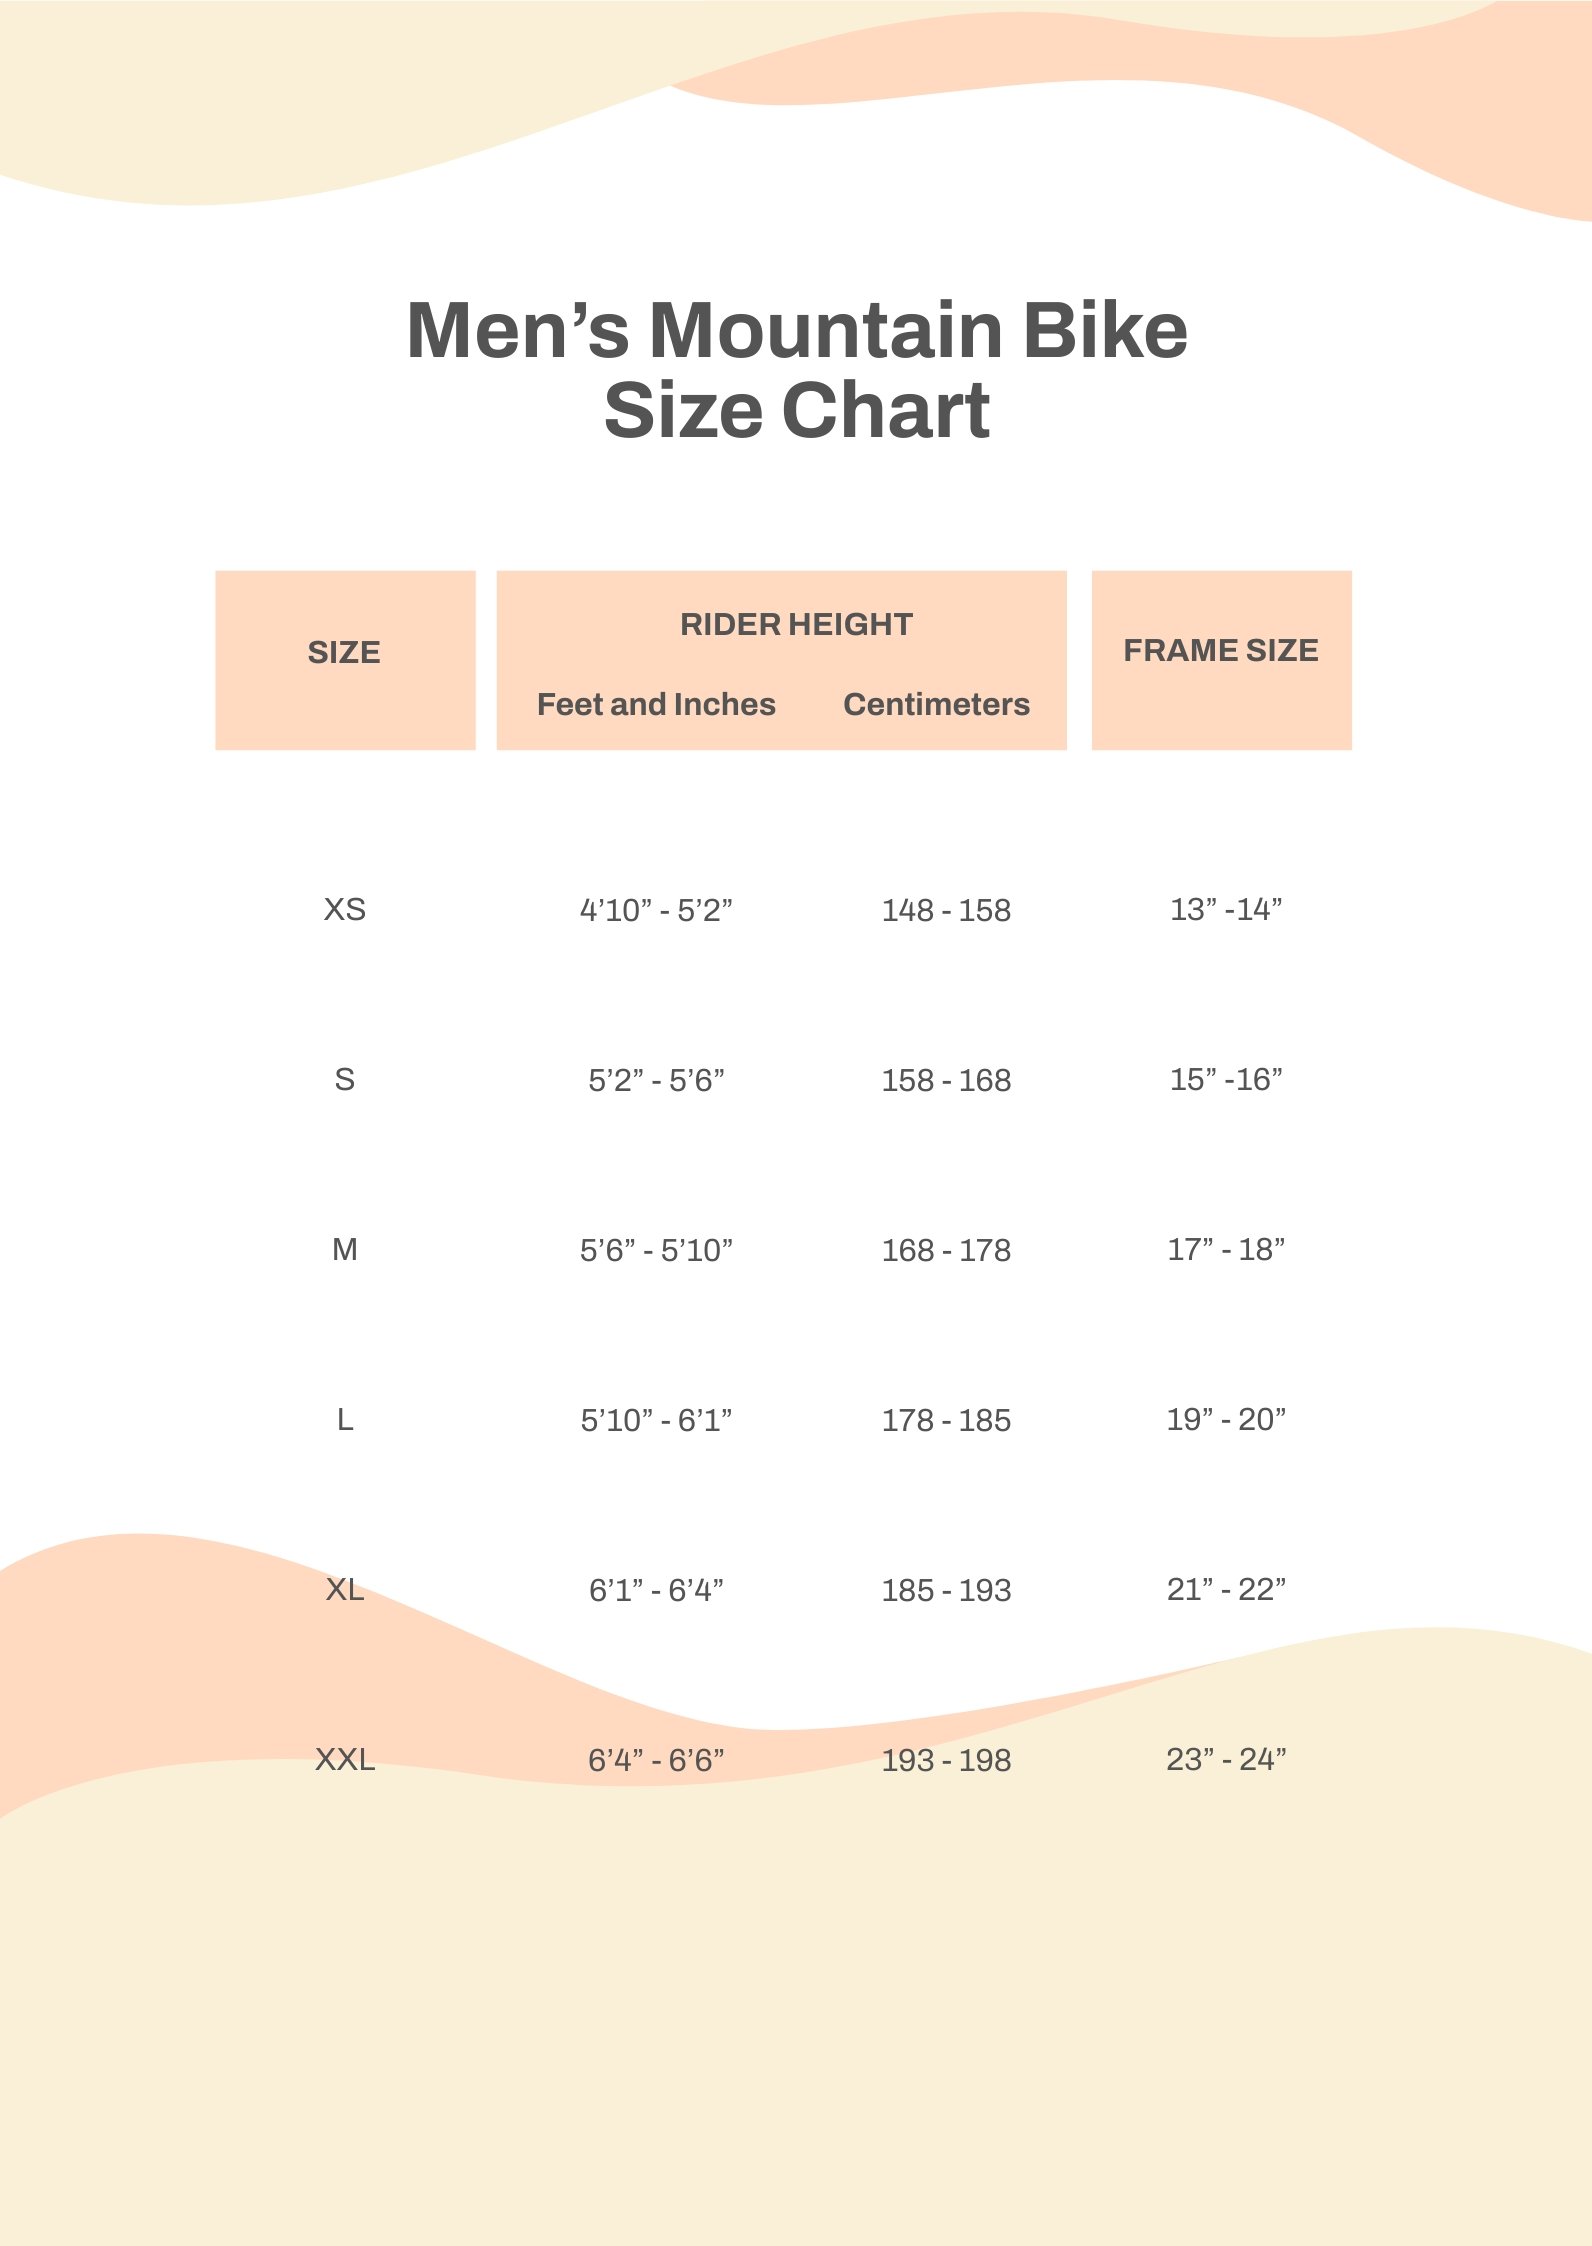 Men's Mountain Bike Size Chart in PDF